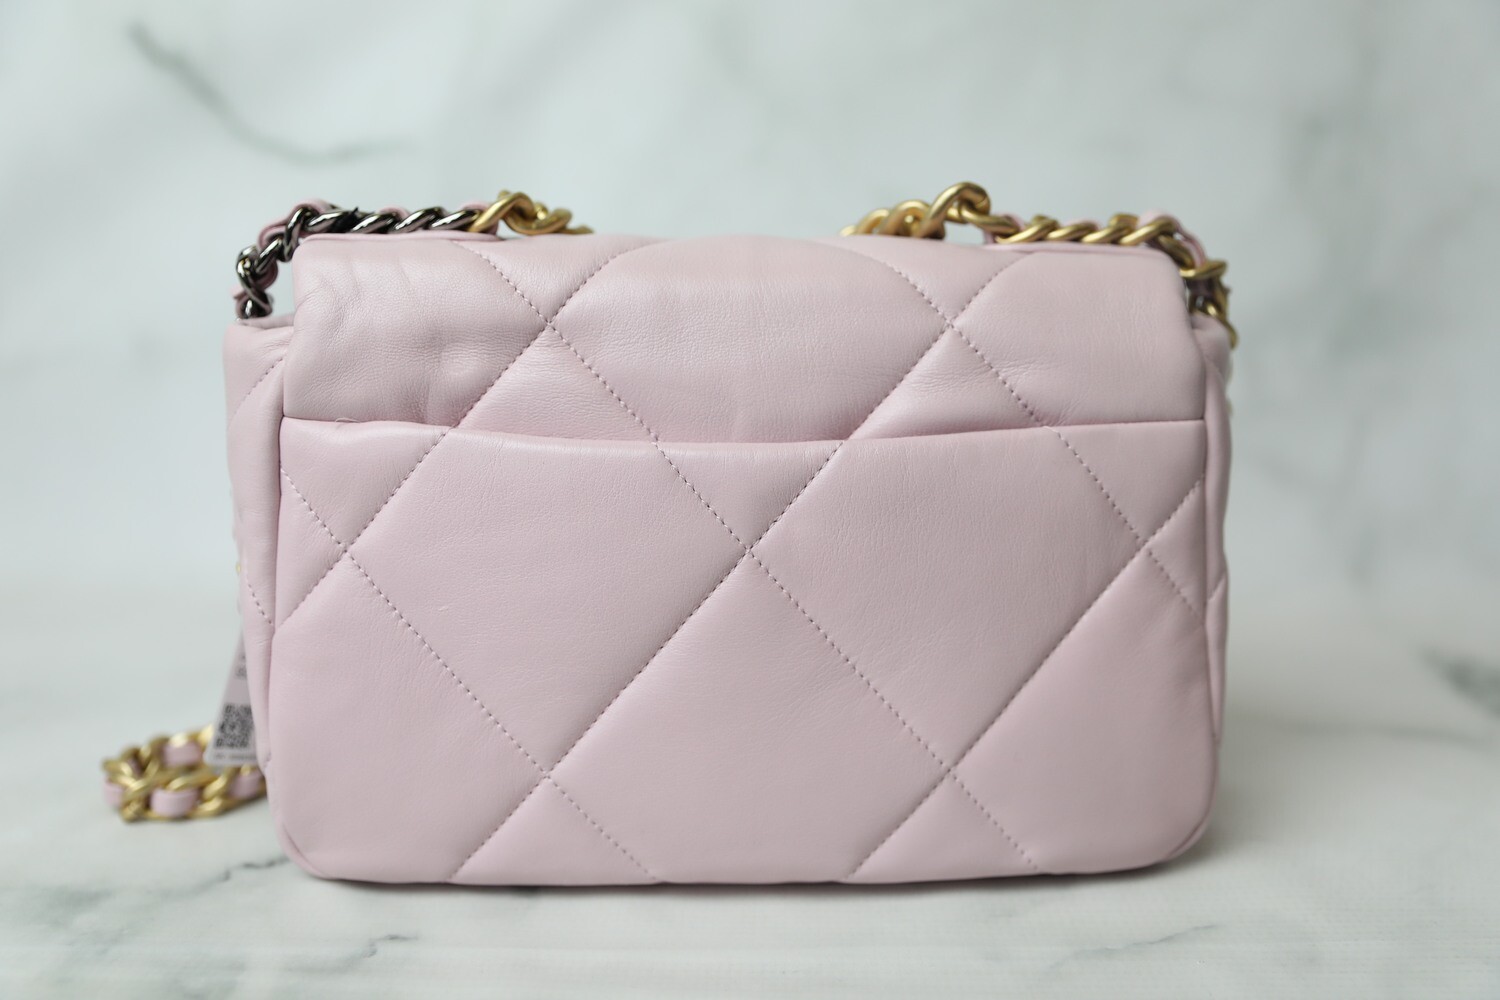 Chanel 19 Small, 21C Pink Sequin, New in Box WA001 - Julia Rose